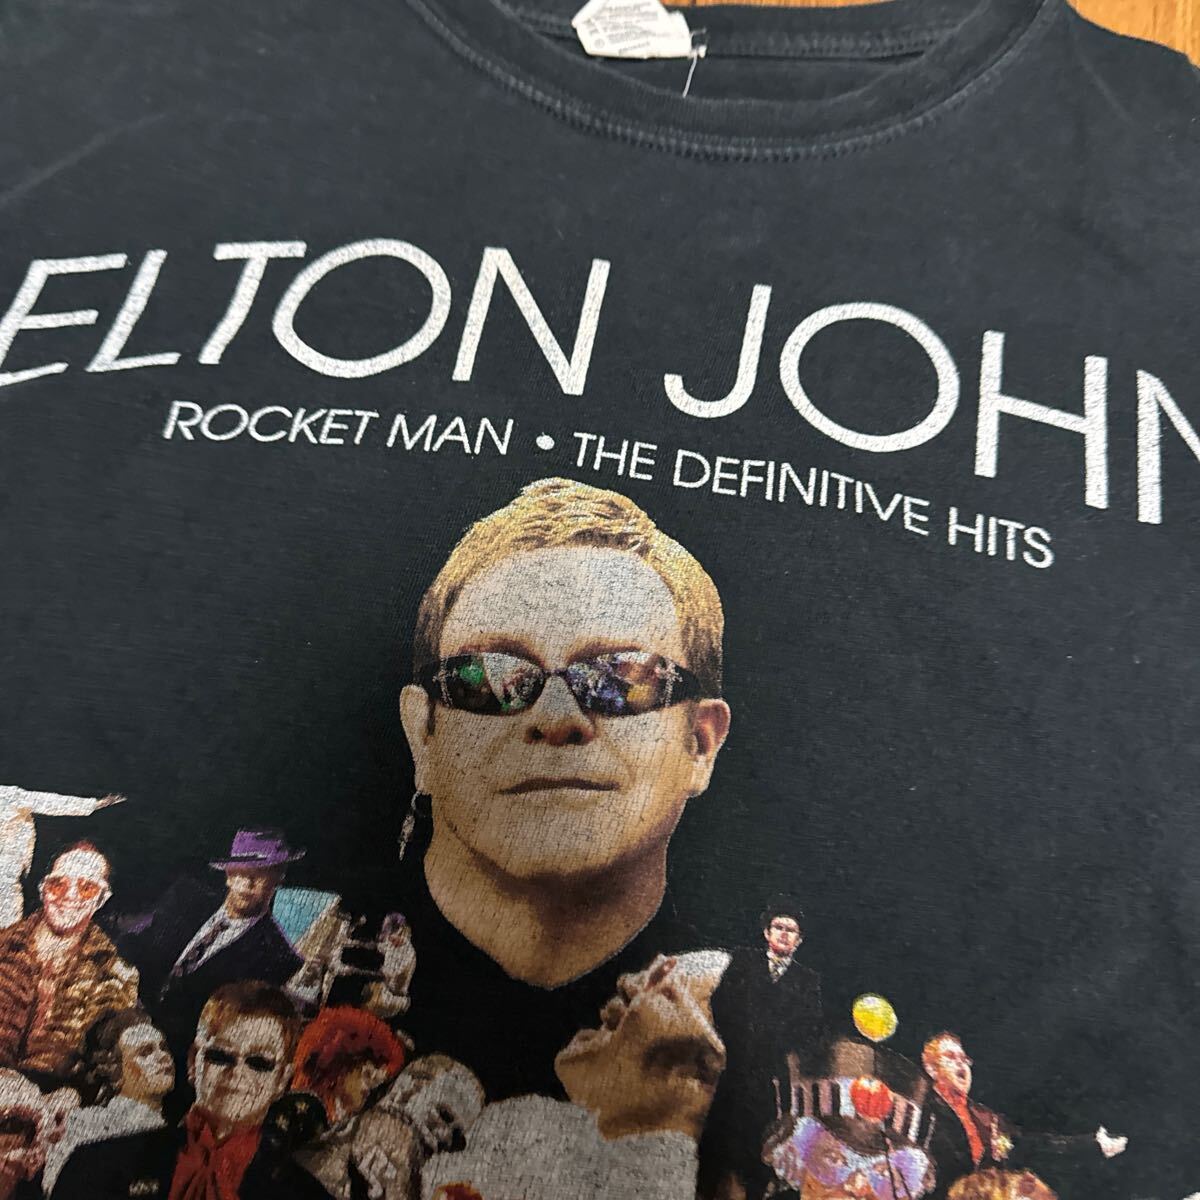 ELTON JOHN ROCKET MAN 2010  Элтон Джон  2010 год 　... футболка   лента  футболка  